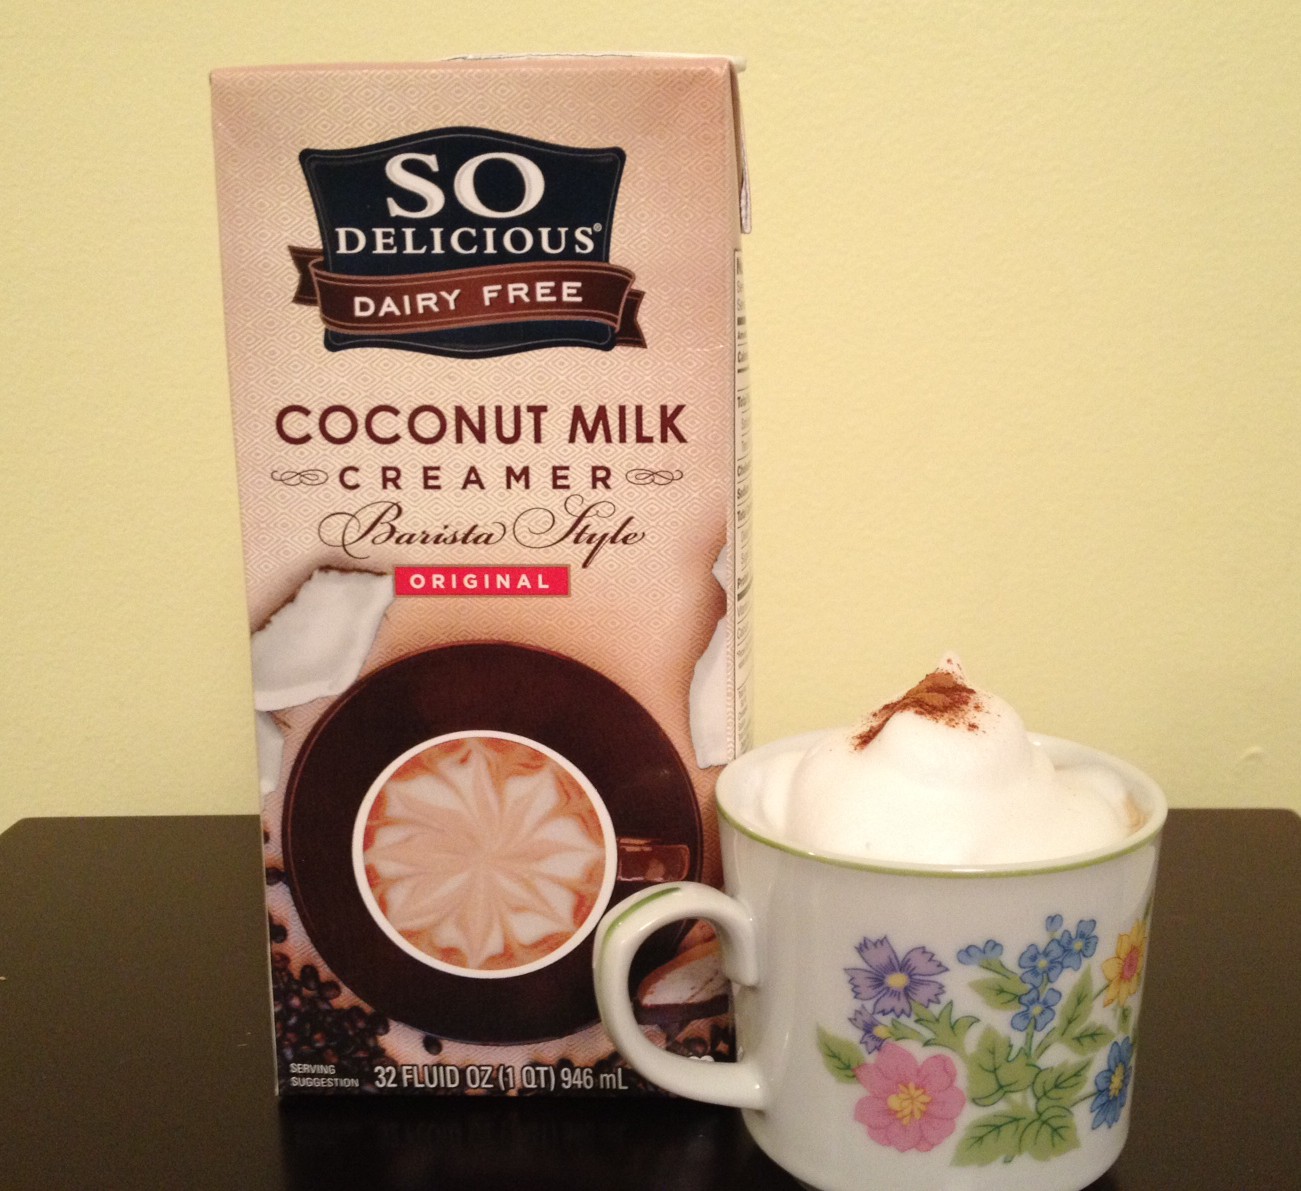 So Delicious Barista Style Coconut Milk Creamer Review